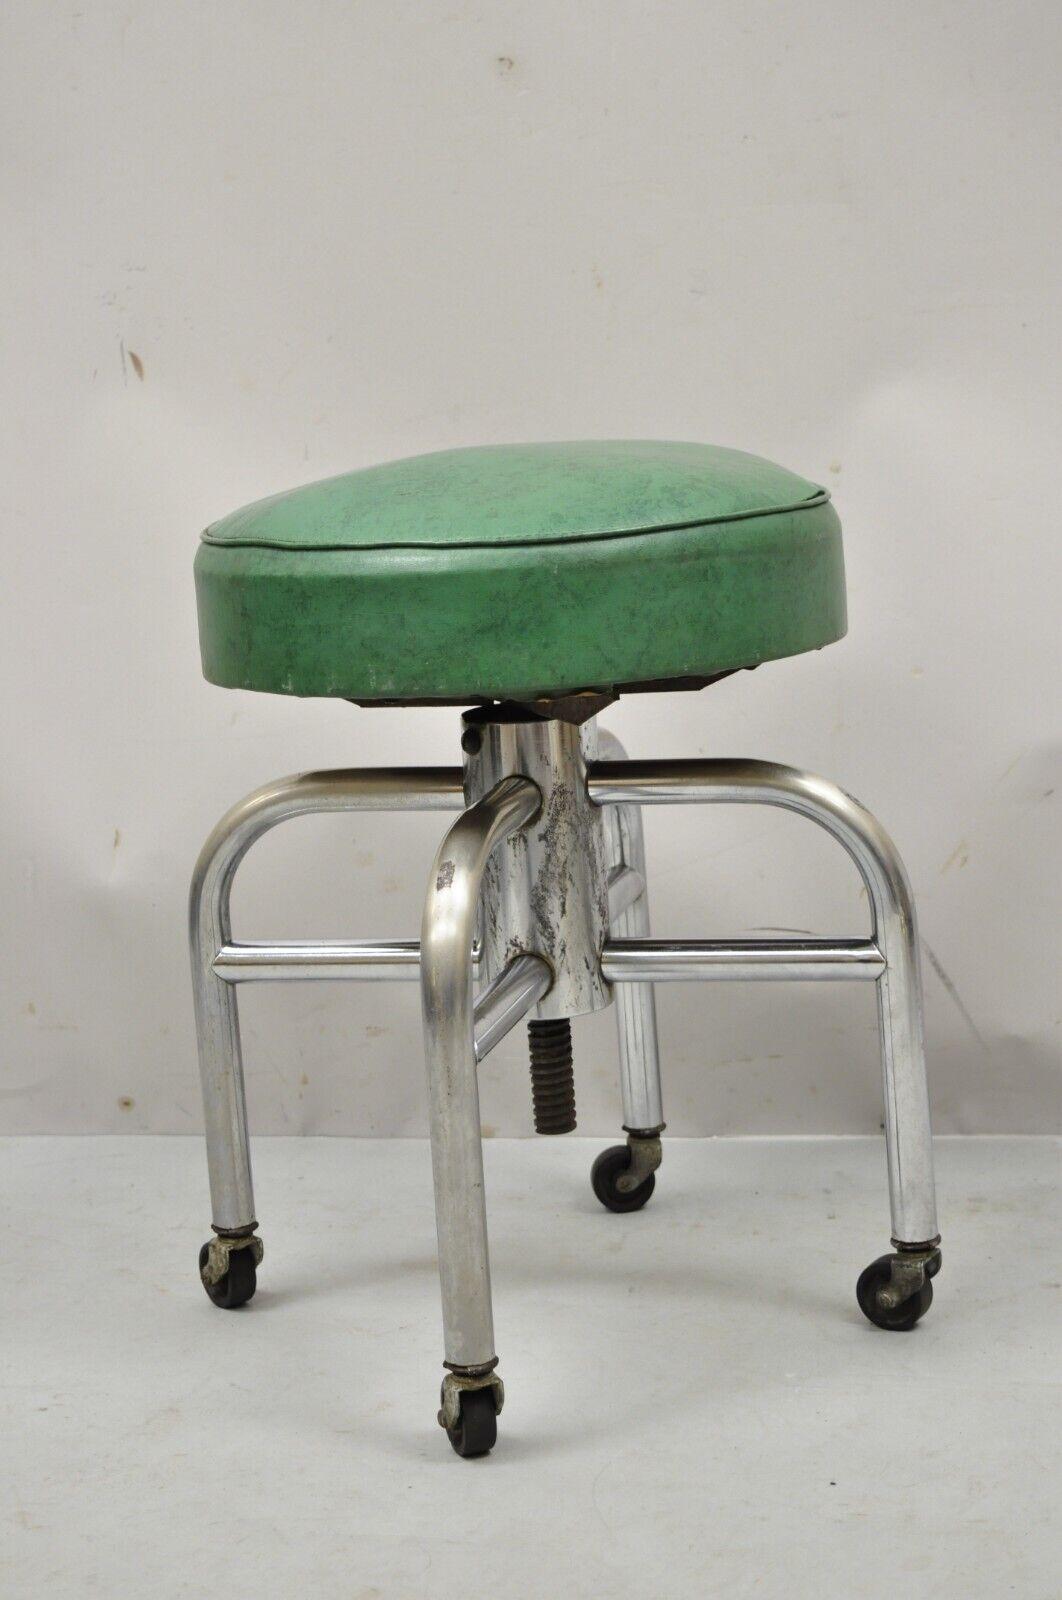 Antique American Industrial Metal Green Vinyl Rolling Work Stool Seat. item features round adjustable green vinyl seat, chrome metal base, rolling castors. Circa mid 20th Century. Measurements: 19-26